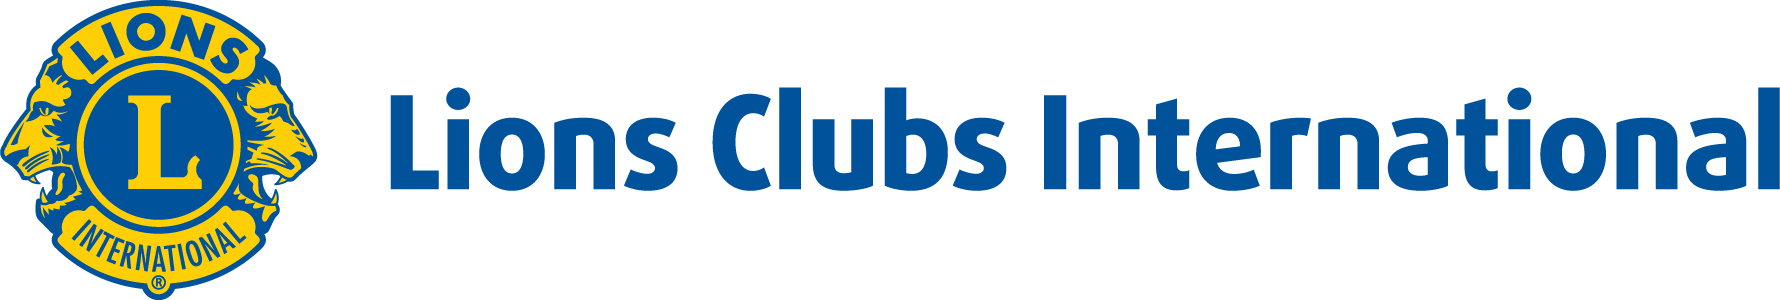 Lions Club Internations banner logo